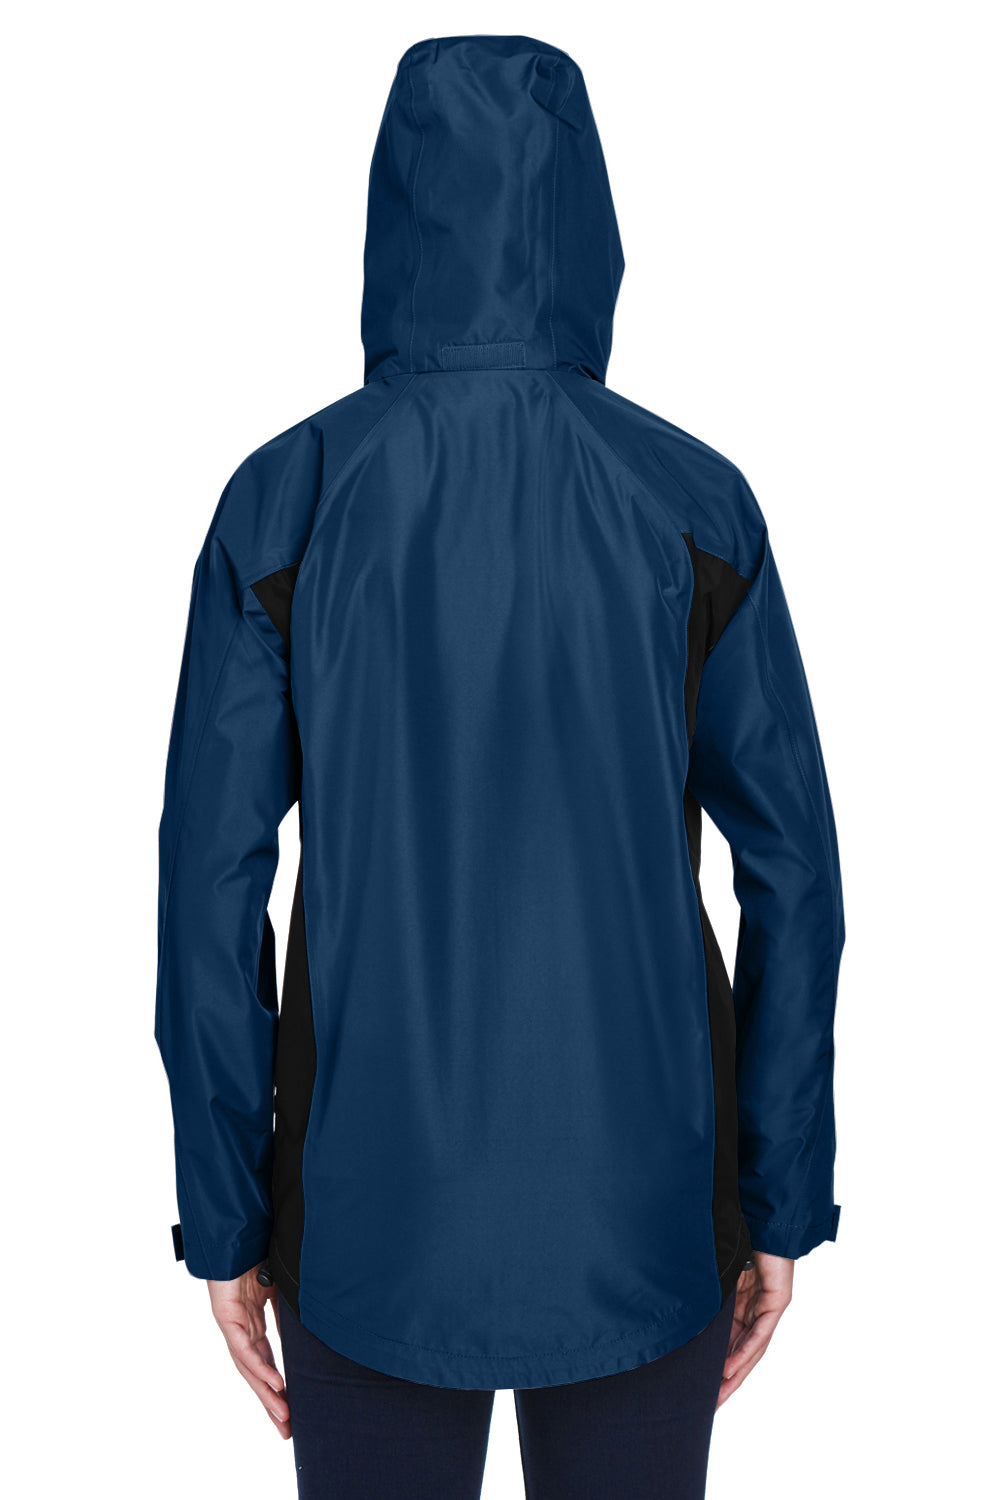 Team 365 TT86W Womens Dominator Waterproof Full Zip Hooded Jacket Navy Blue Back